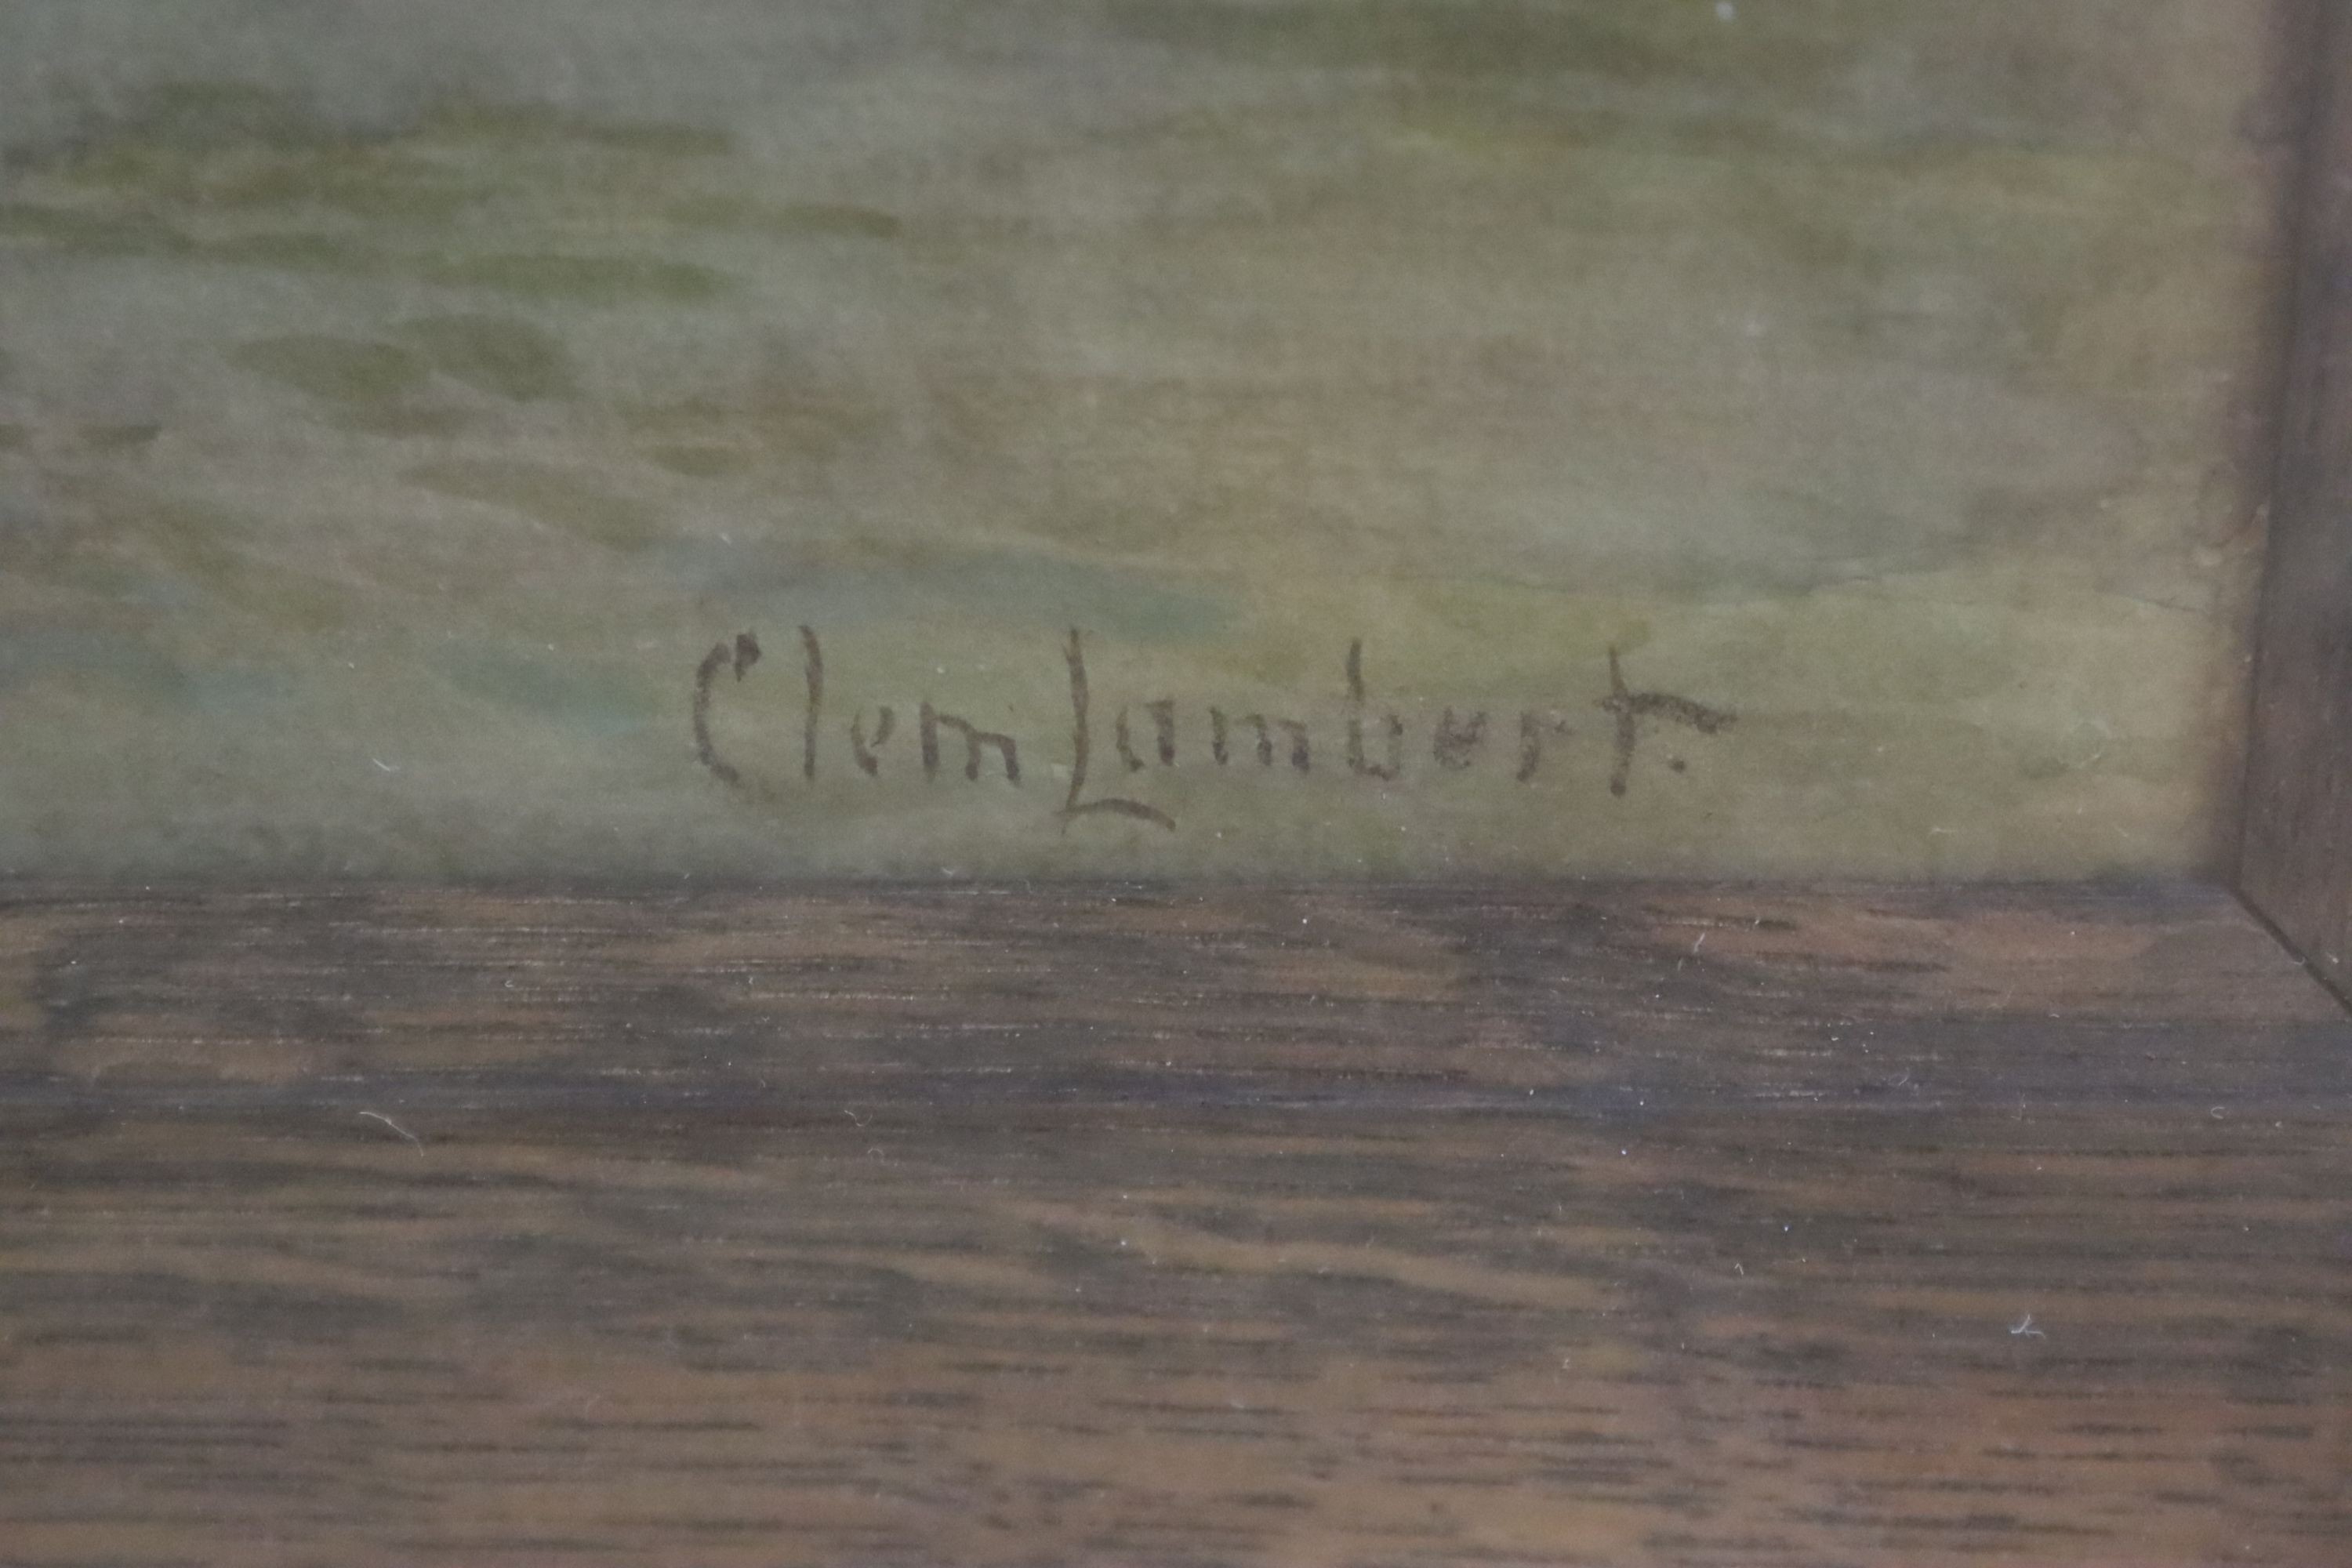 Clement Lambert (1855-1925), watercolour, 'My boyhood haunt' (View of Shoreham from Lancing Clump), signed, 34 x 52cm